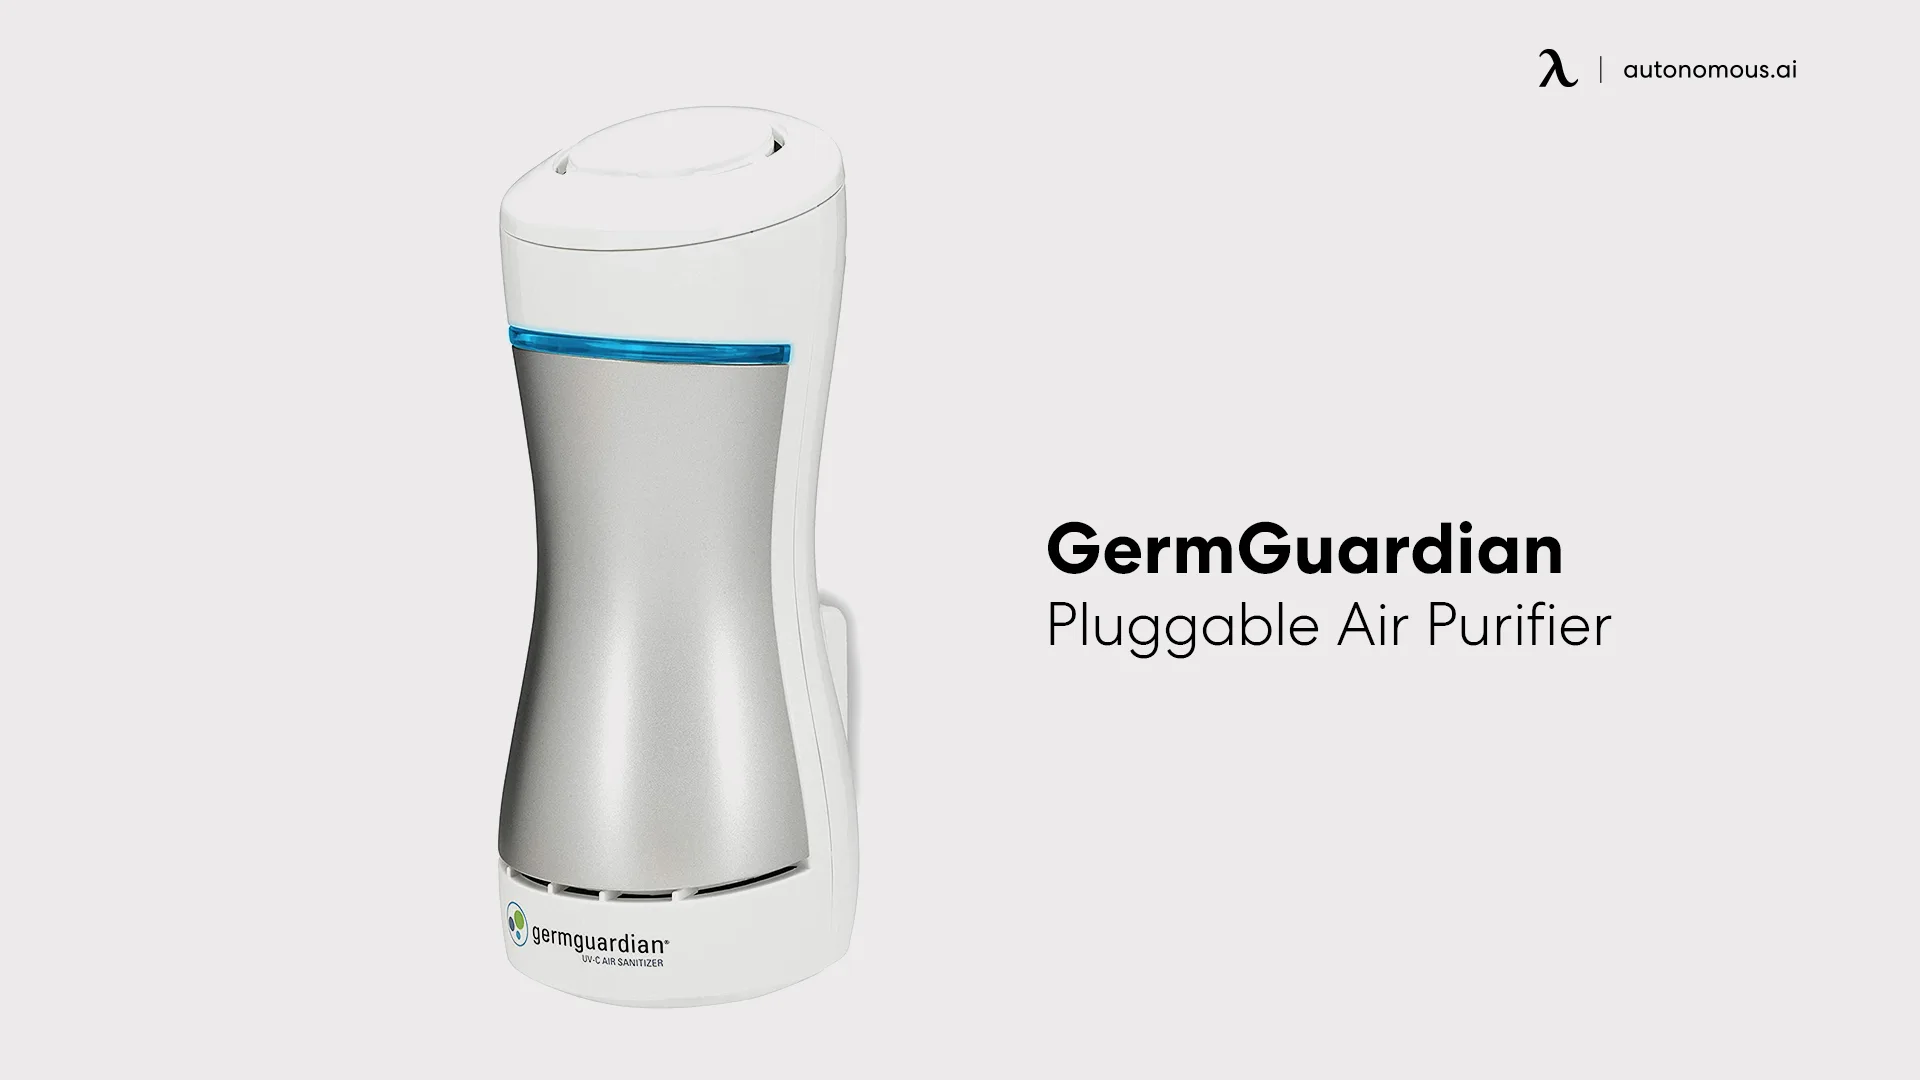 GermGuardian Pluggable Air Purifier